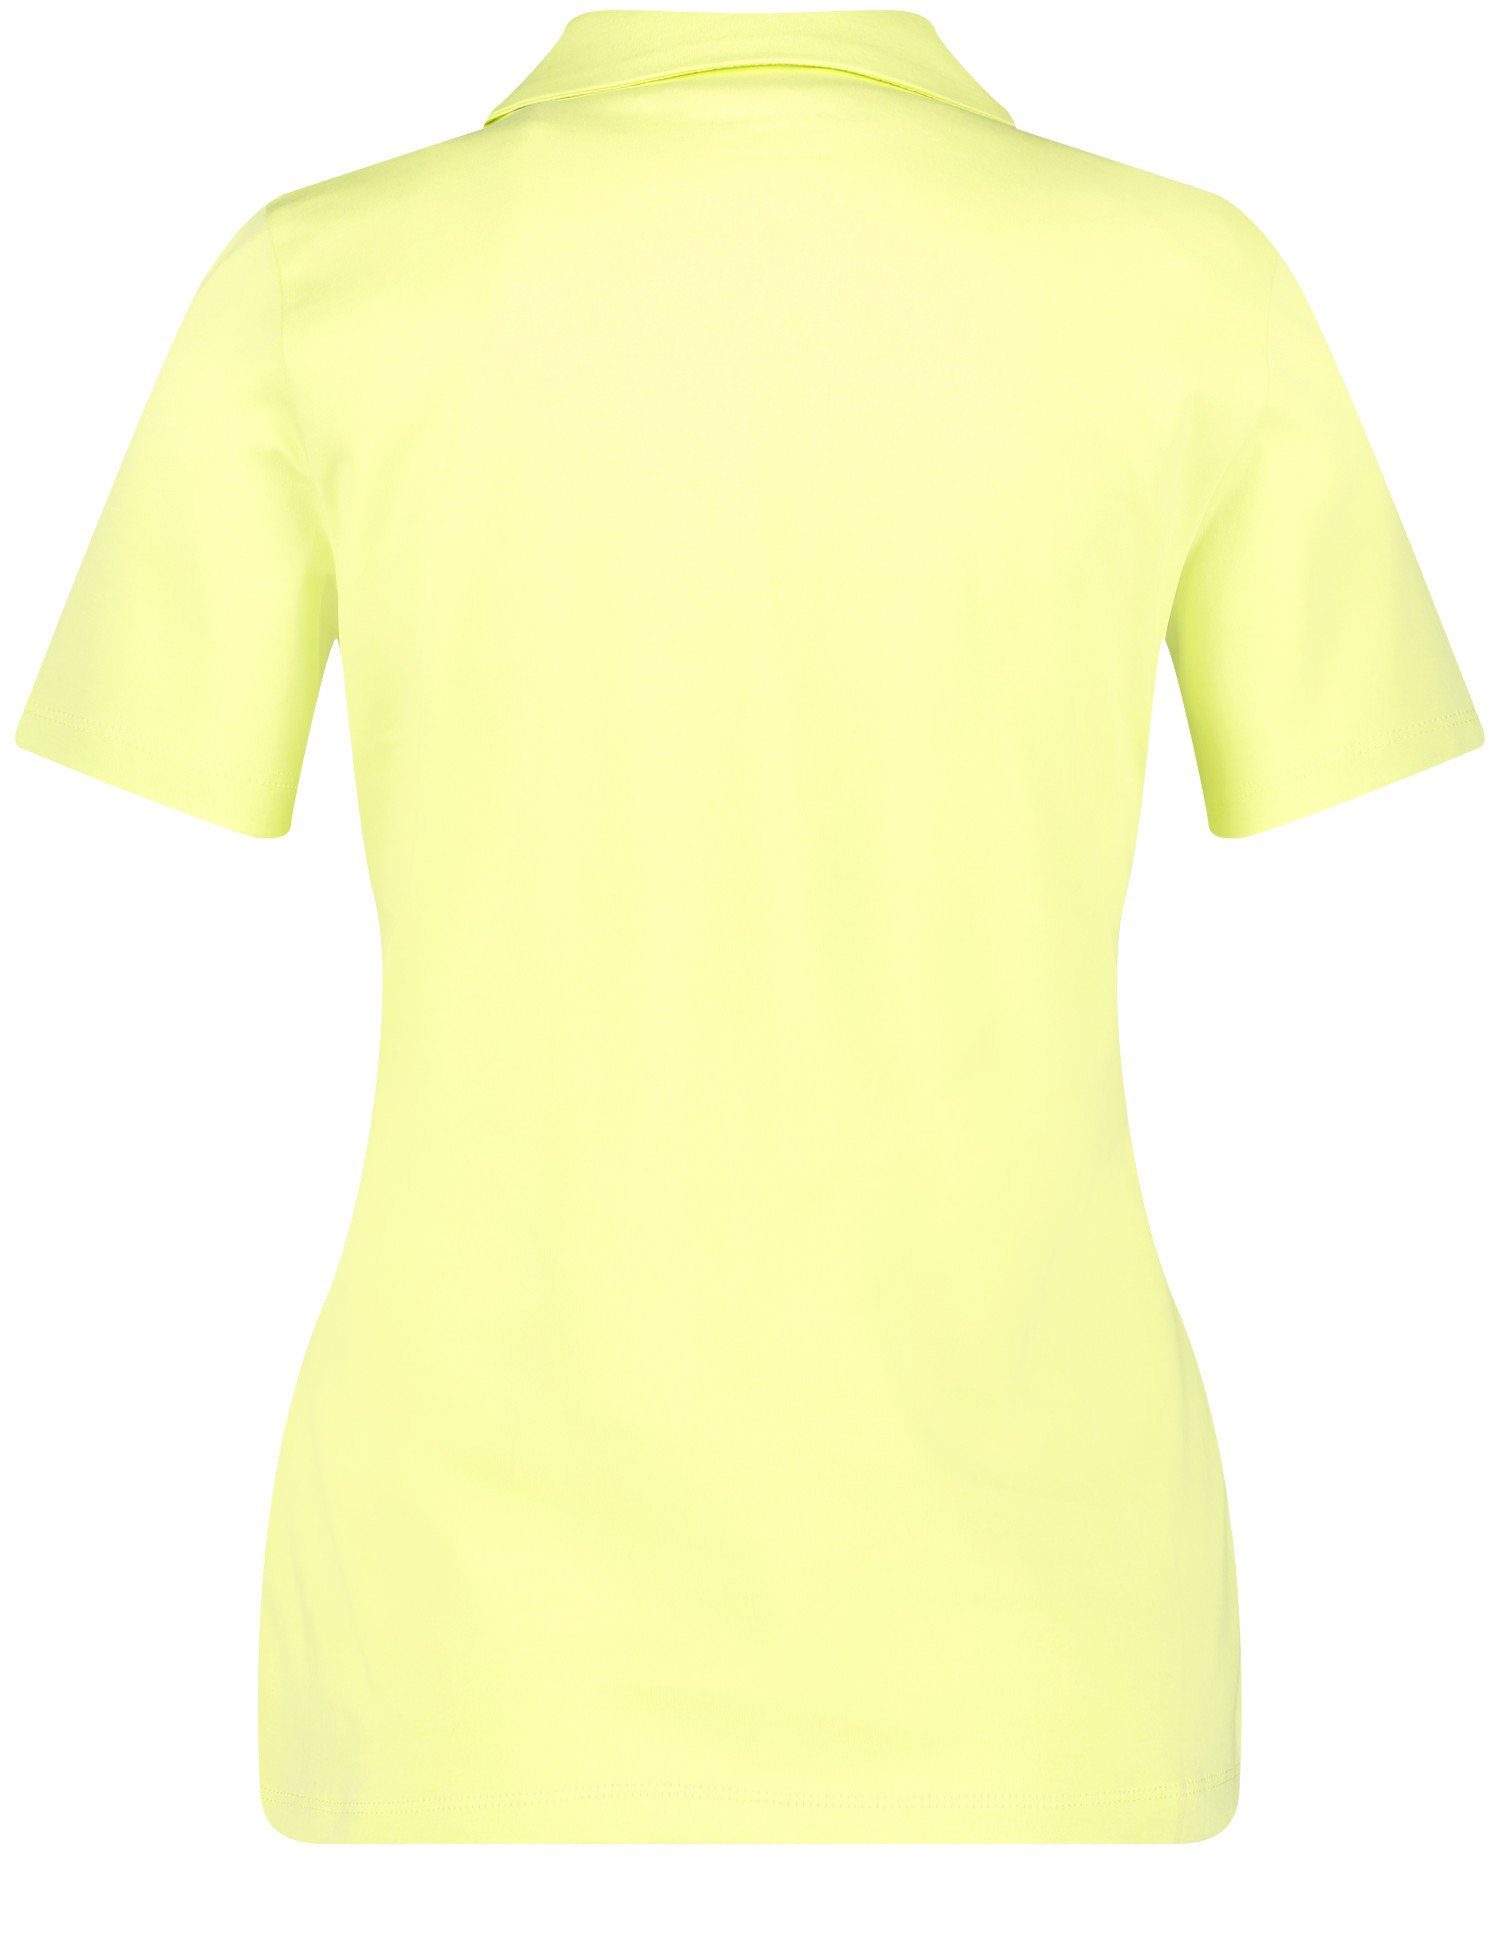 GERRY WEBER Poloshirt Kurzarm Poloshirt Light Lime